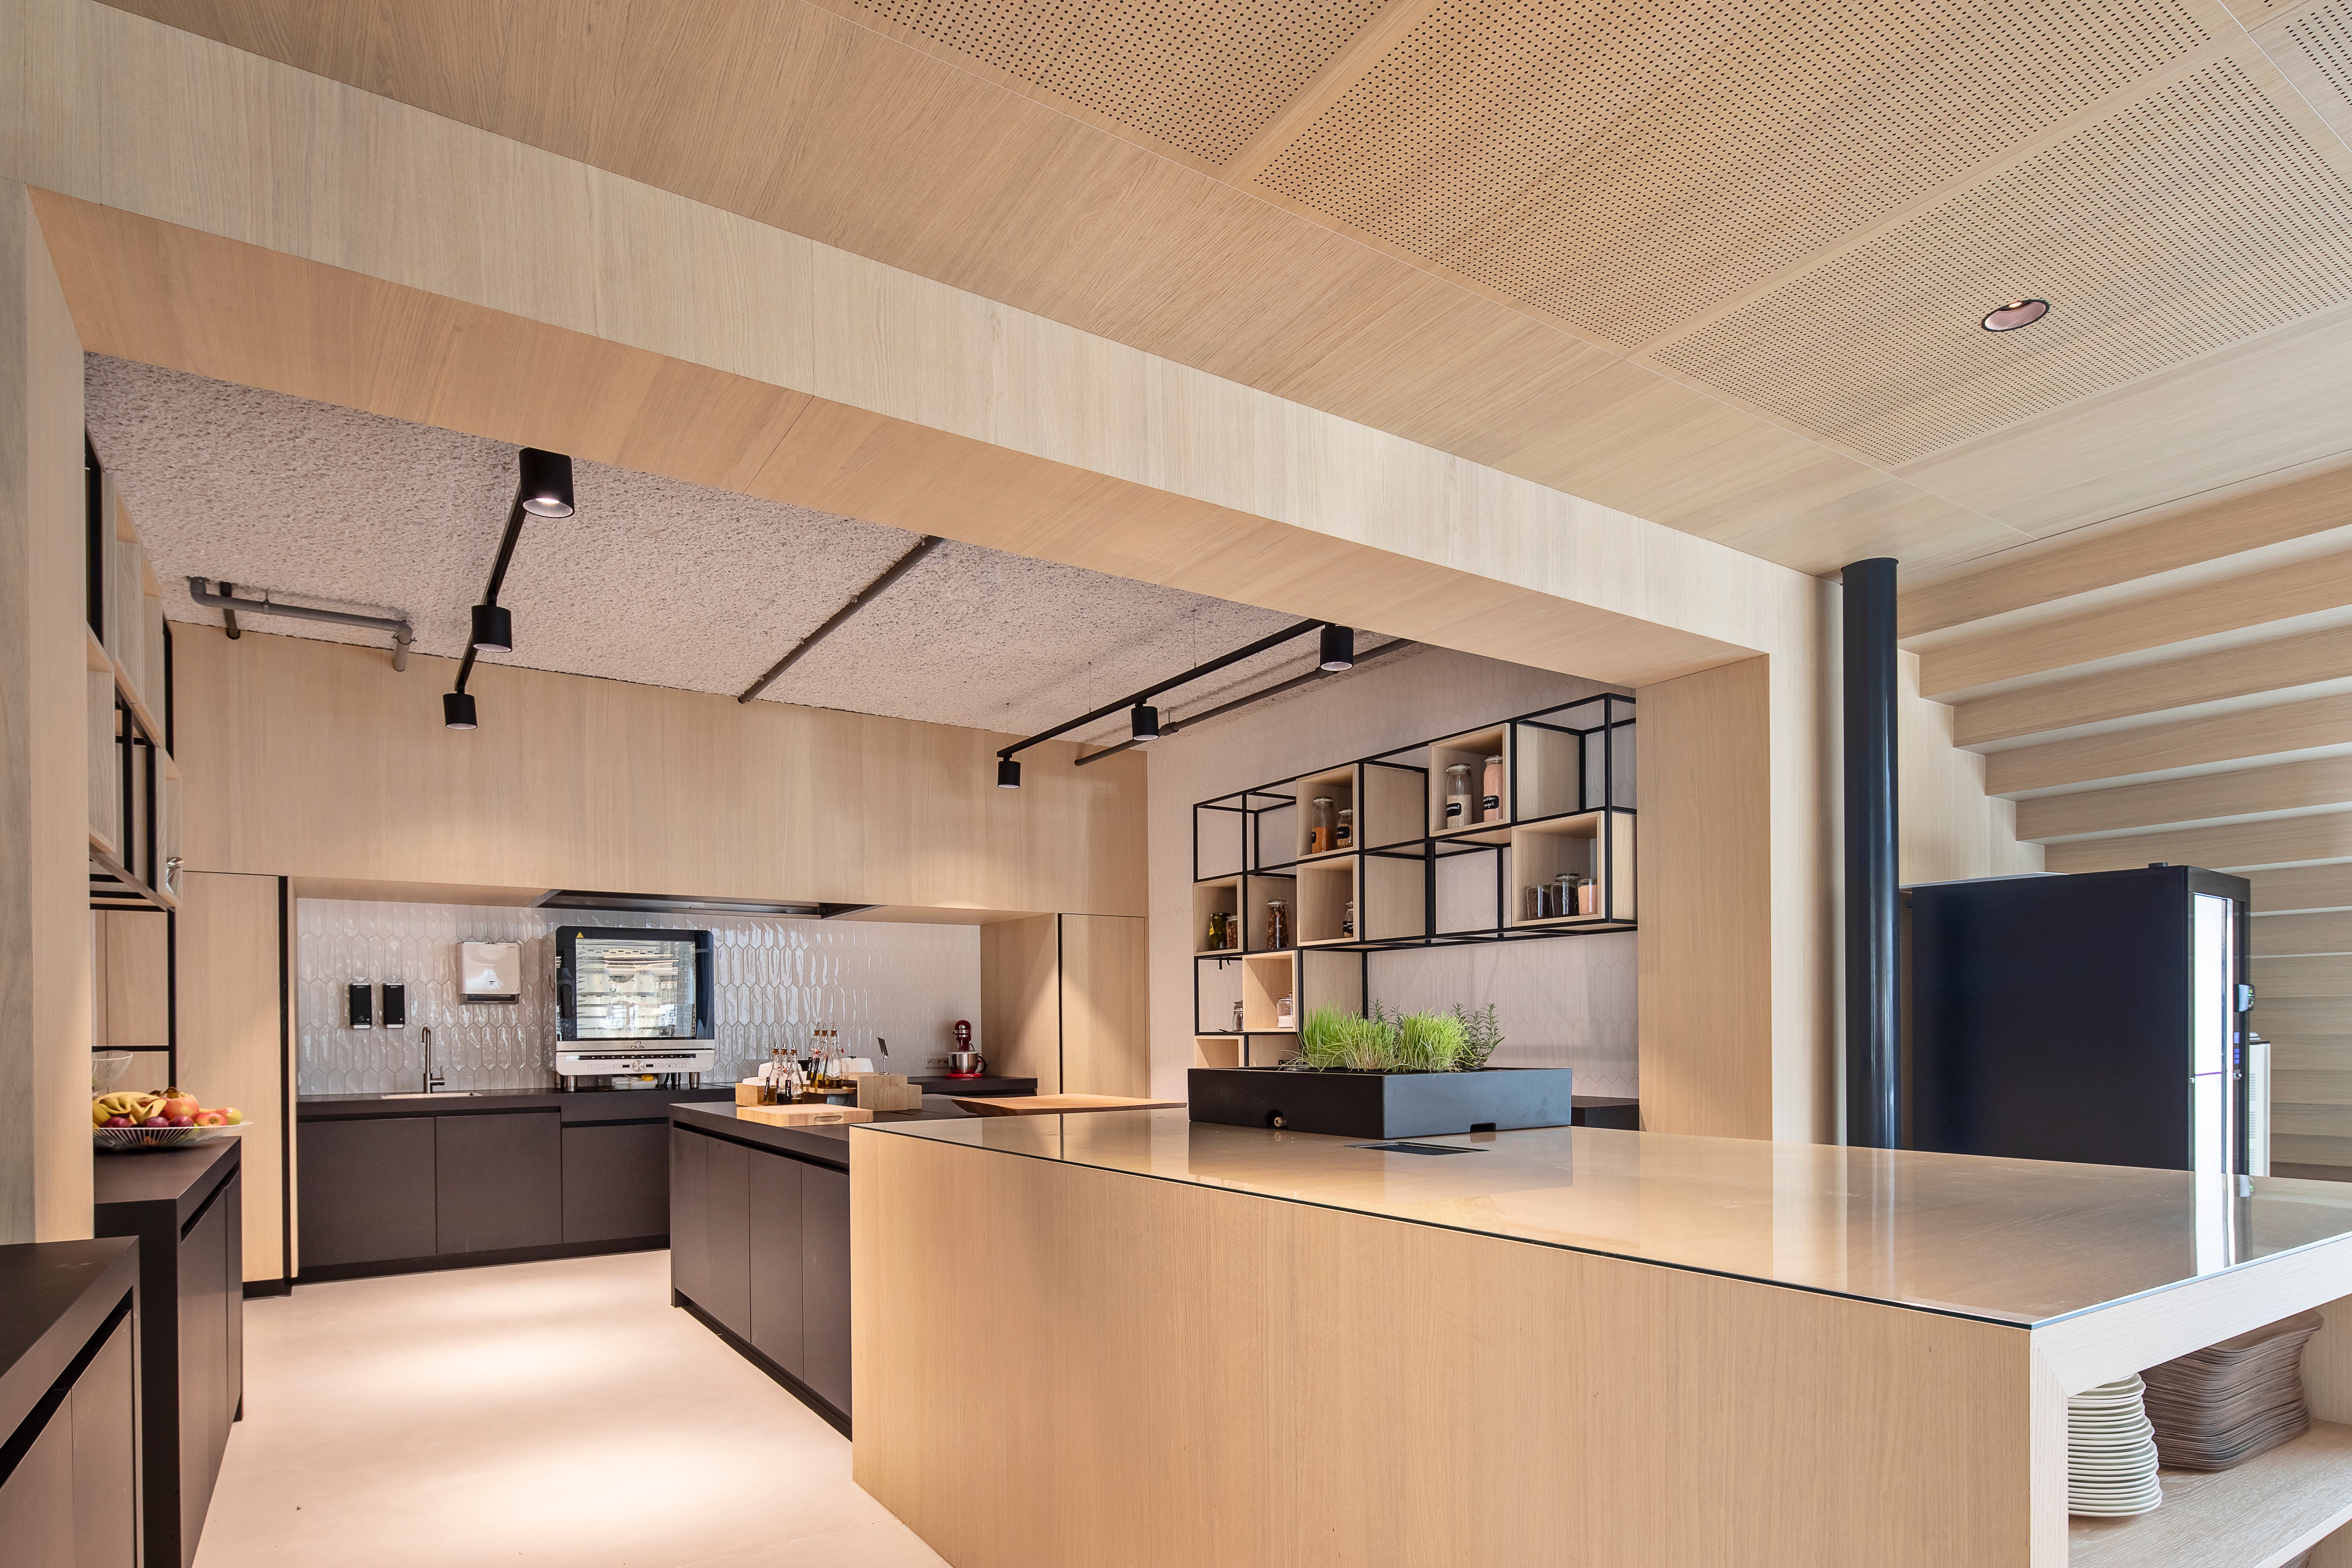 Veneer - veneer kitchens - oak - Shinnoki - Cabbani - Parky - panels - wood panels